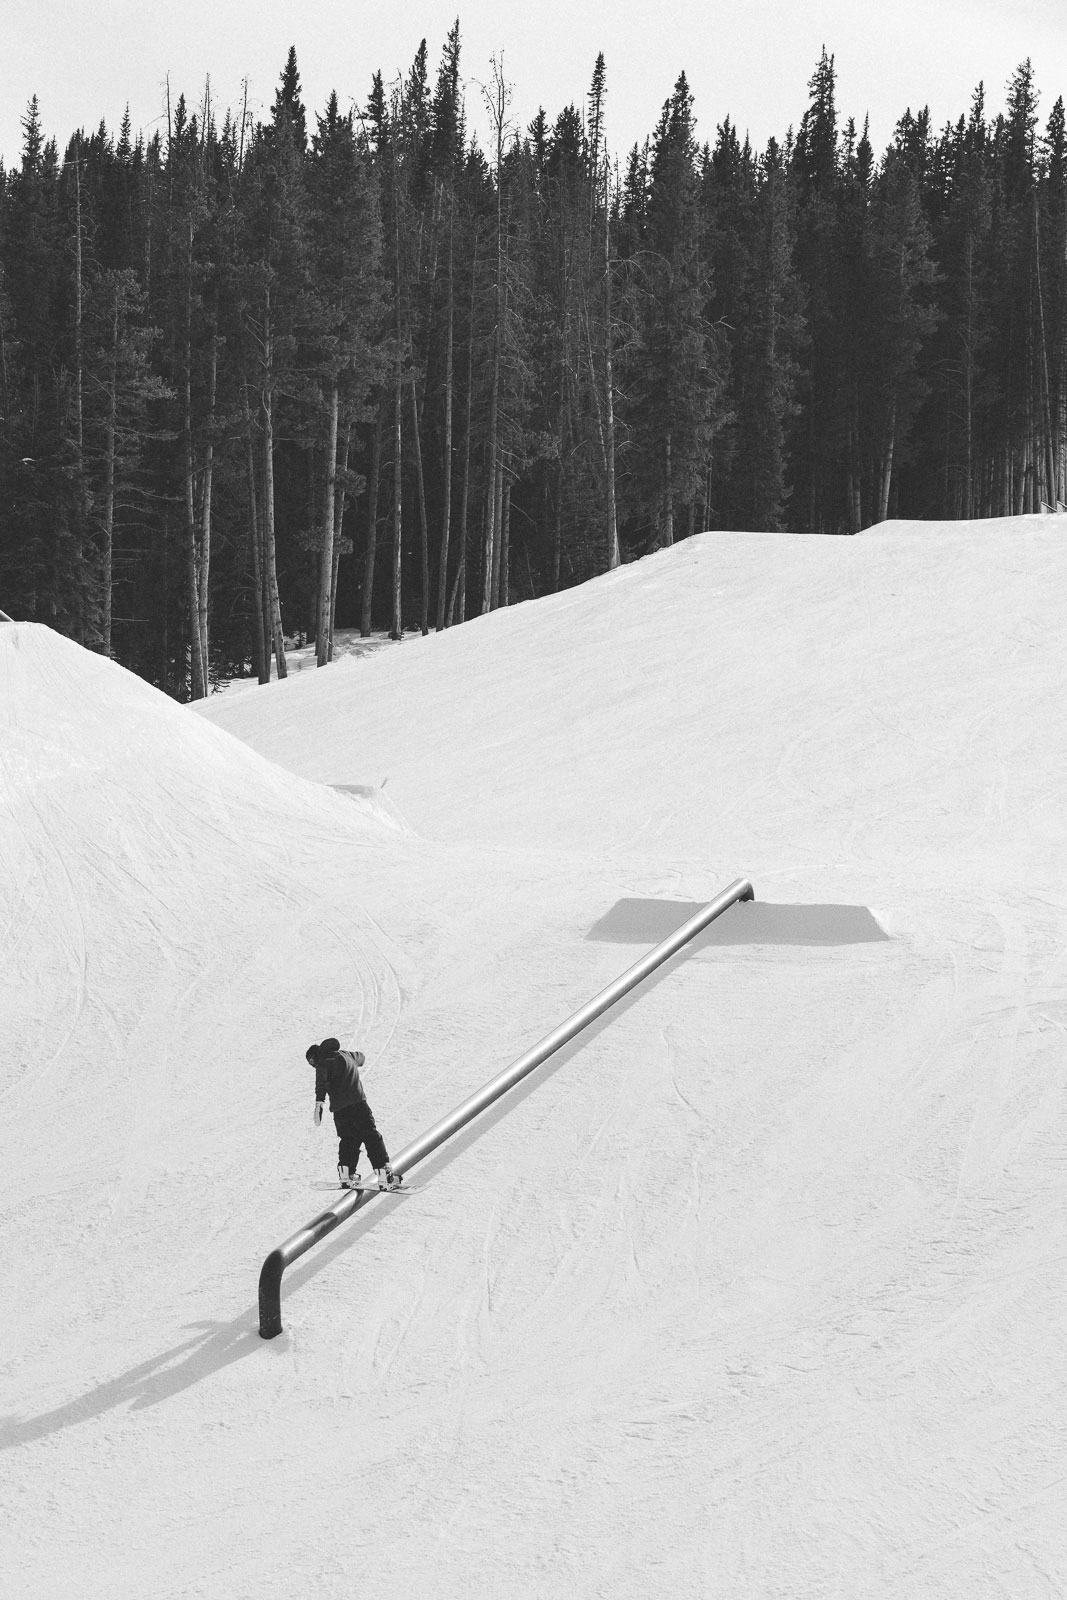 Snowboarder going down rail in terrain park